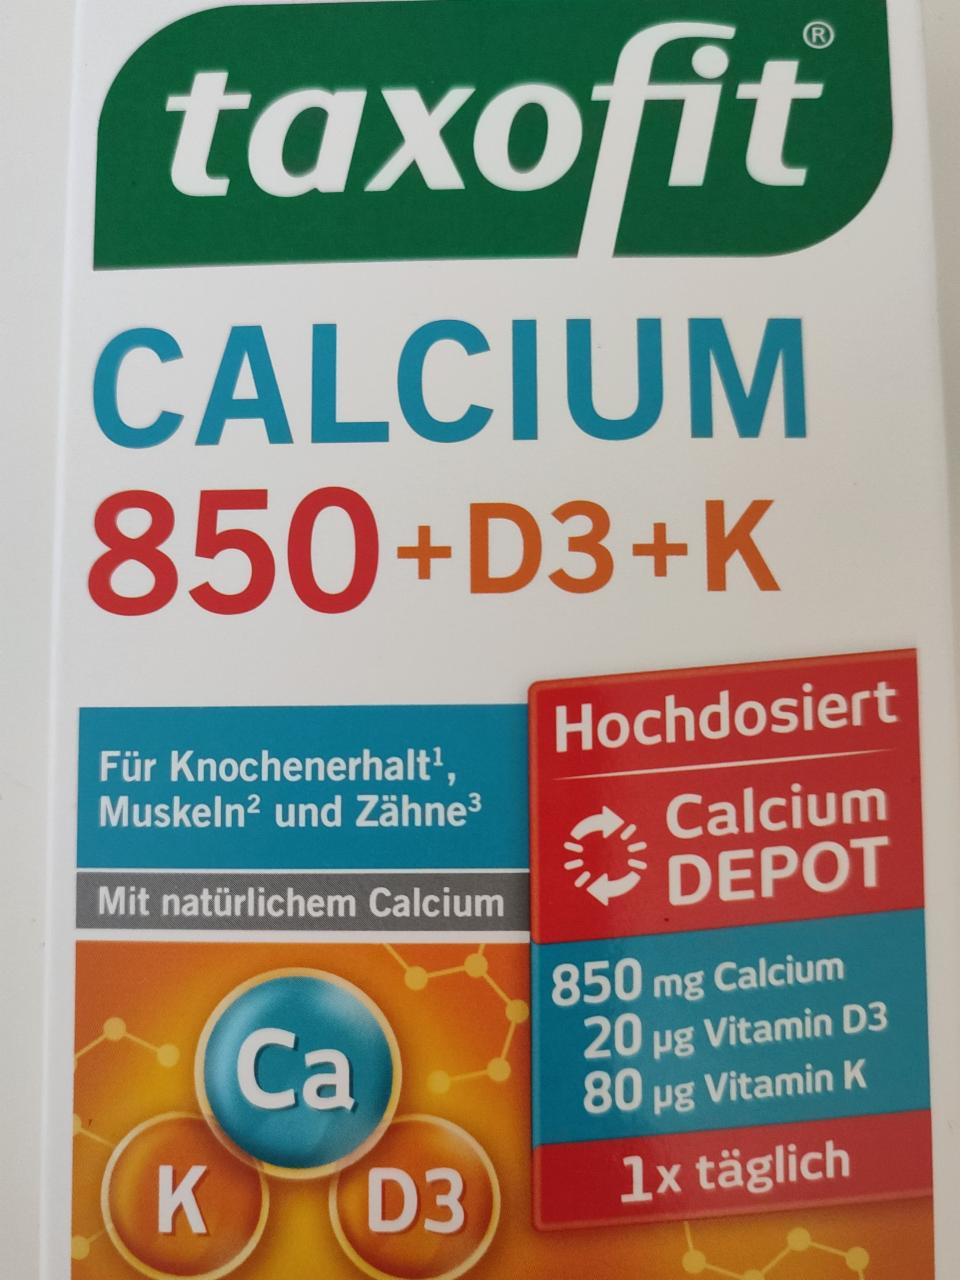 Fotografie - Calcium 850 + D3 + K Taxofit